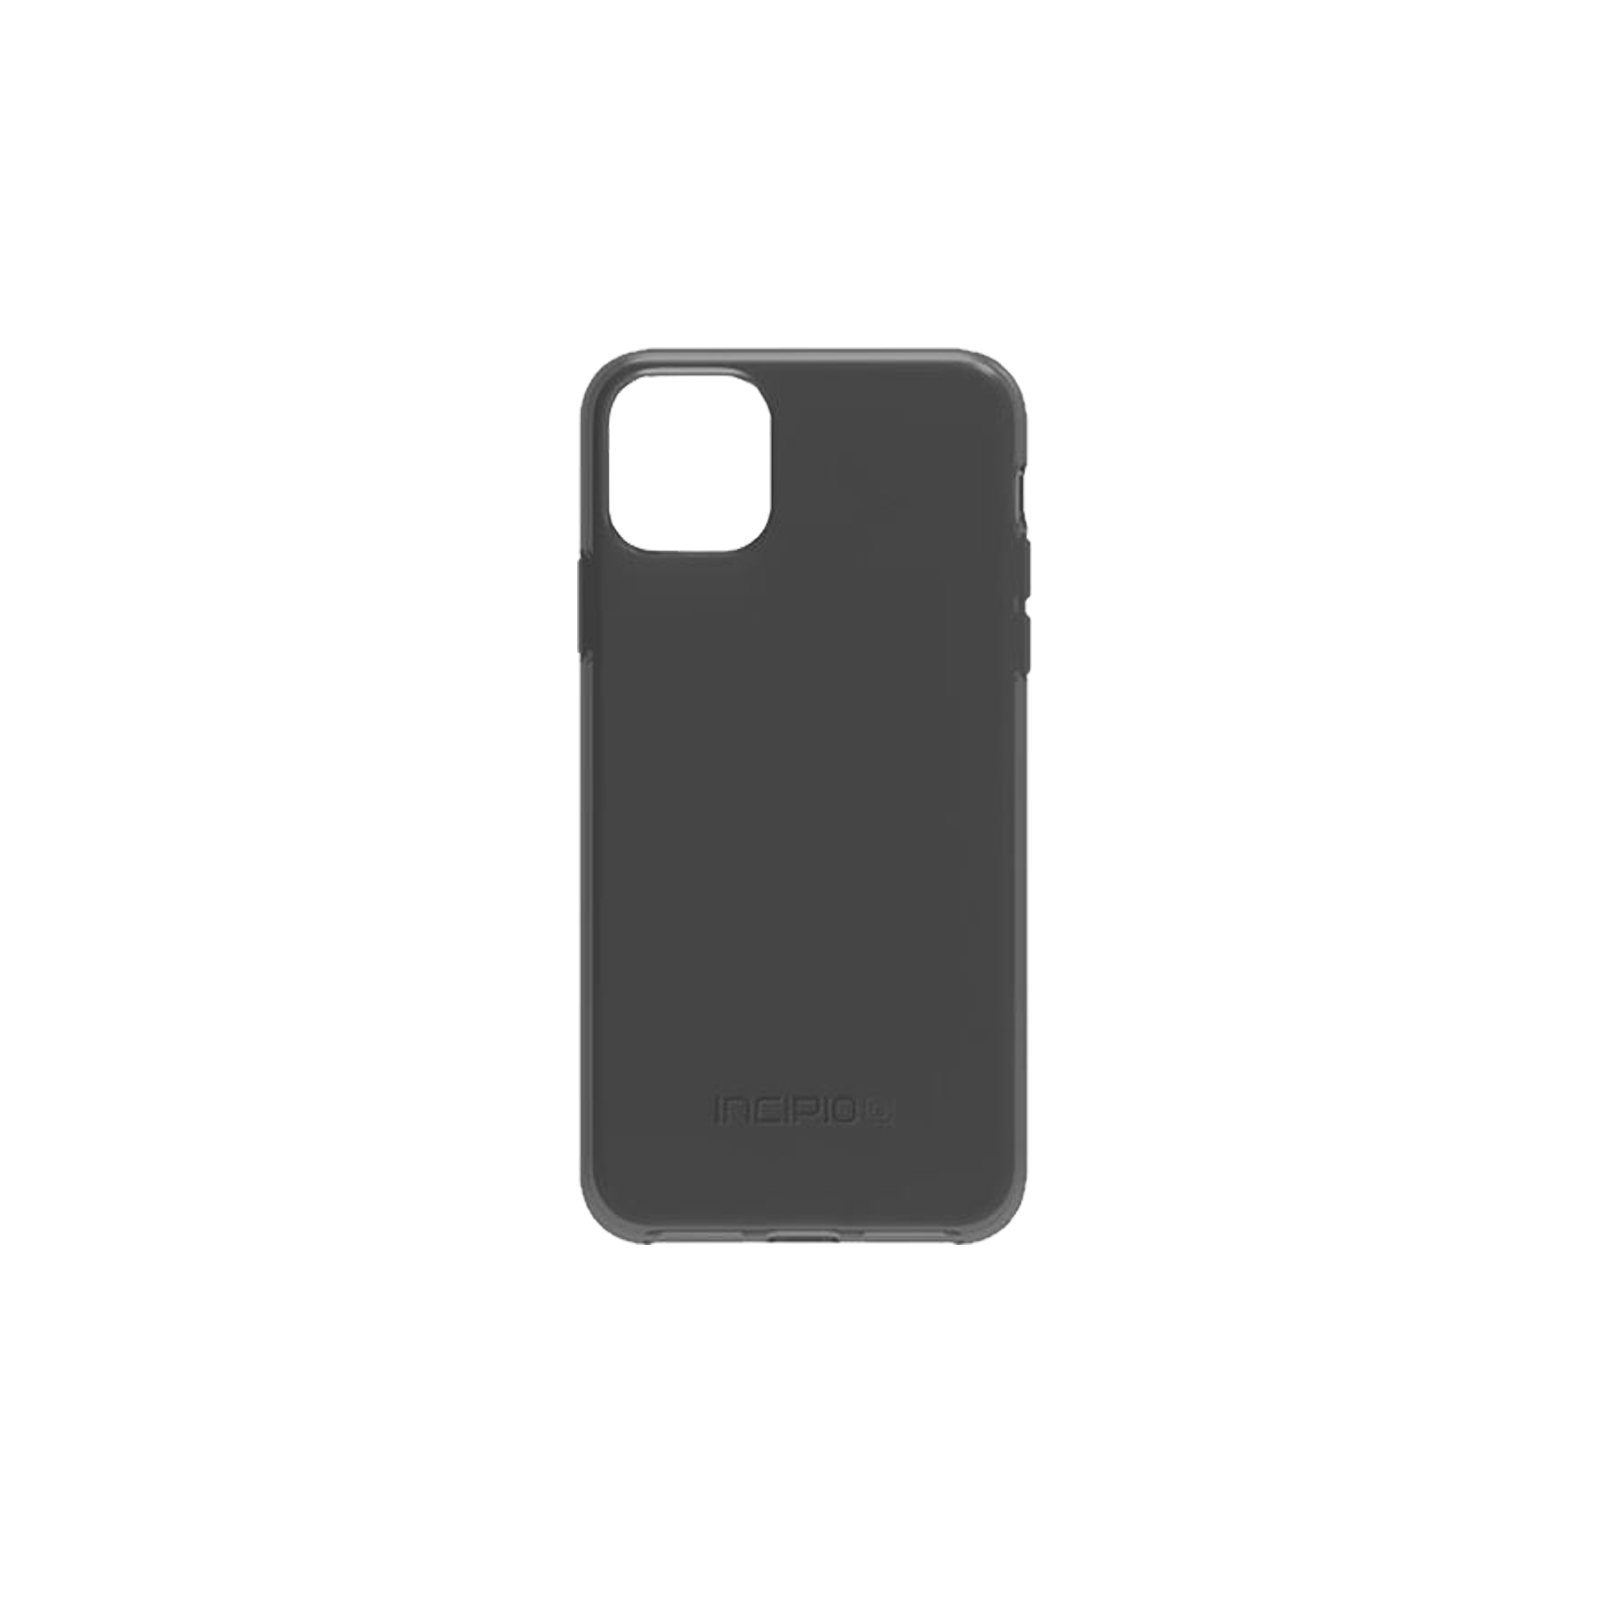 Incipio NGP Case iPhone 11 Pro Max [Black] [Brand New]